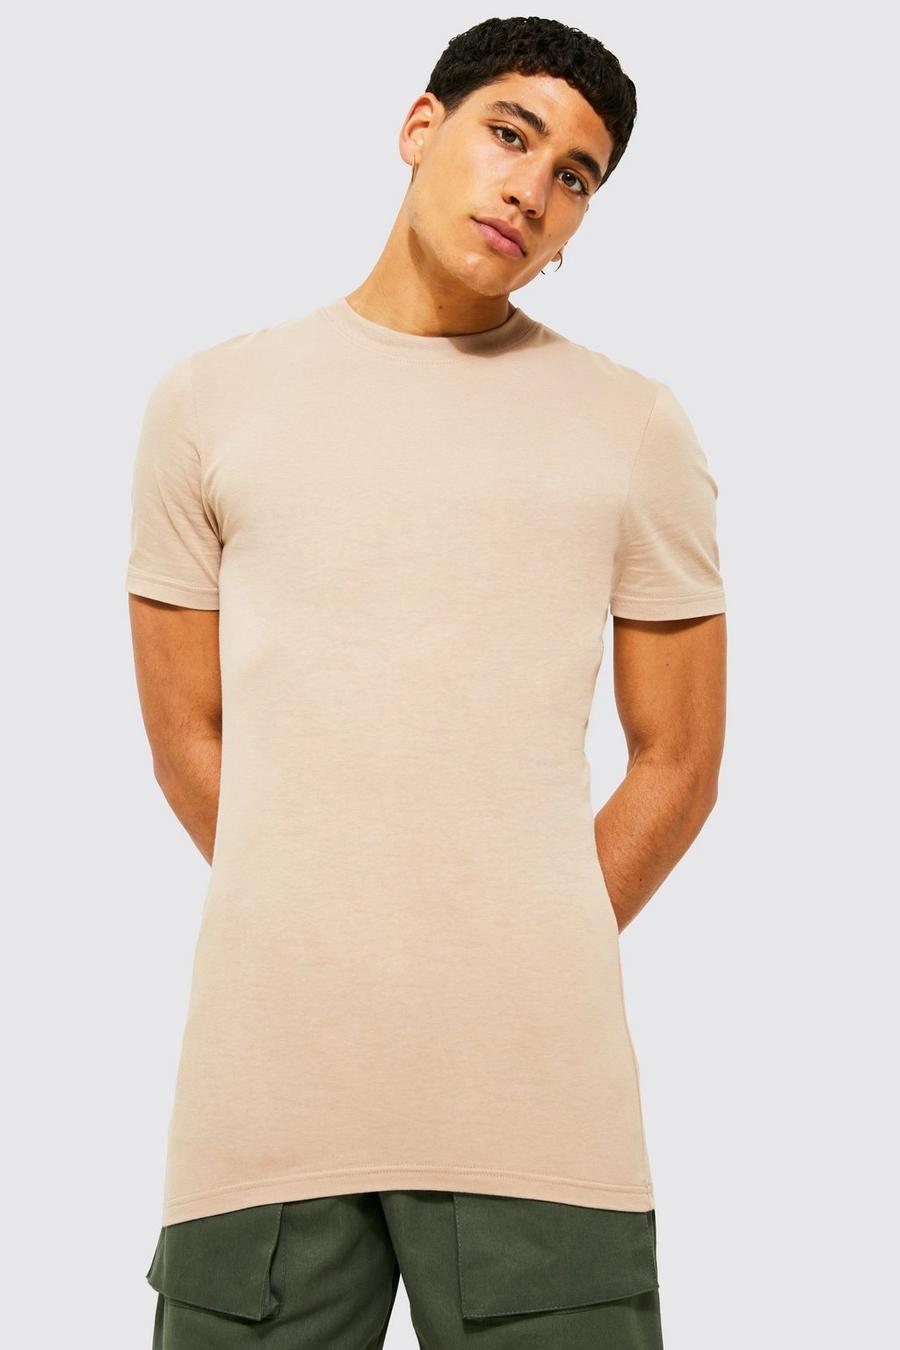 T-shirt attillata lunga in cotone REEL, Taupe beige